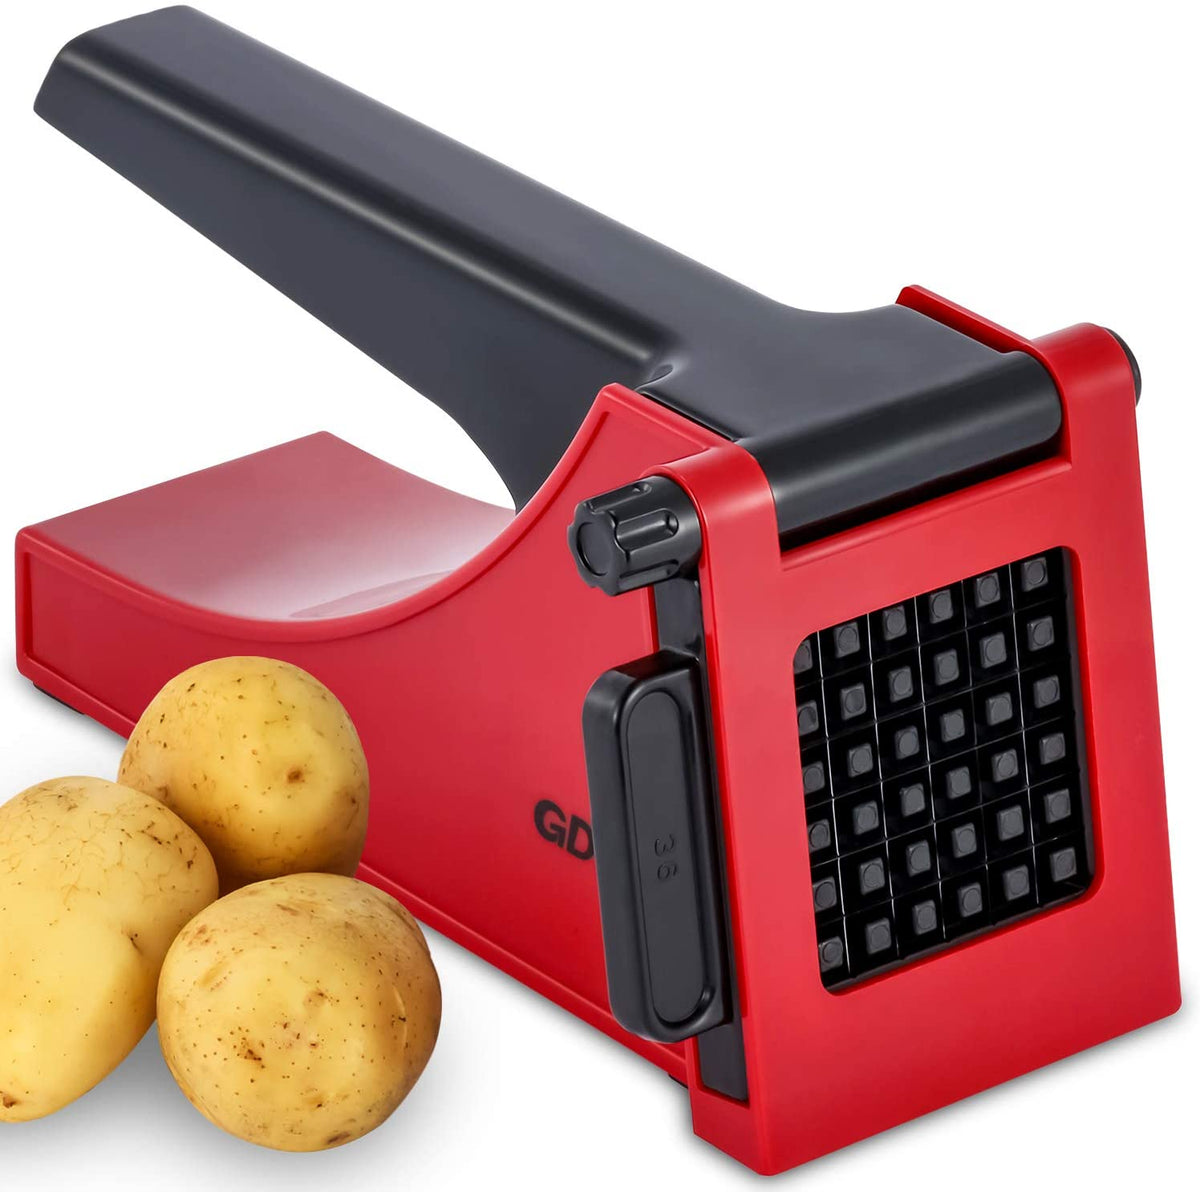 Handy - Potato French Fry Cutter – The Evergreen Cart